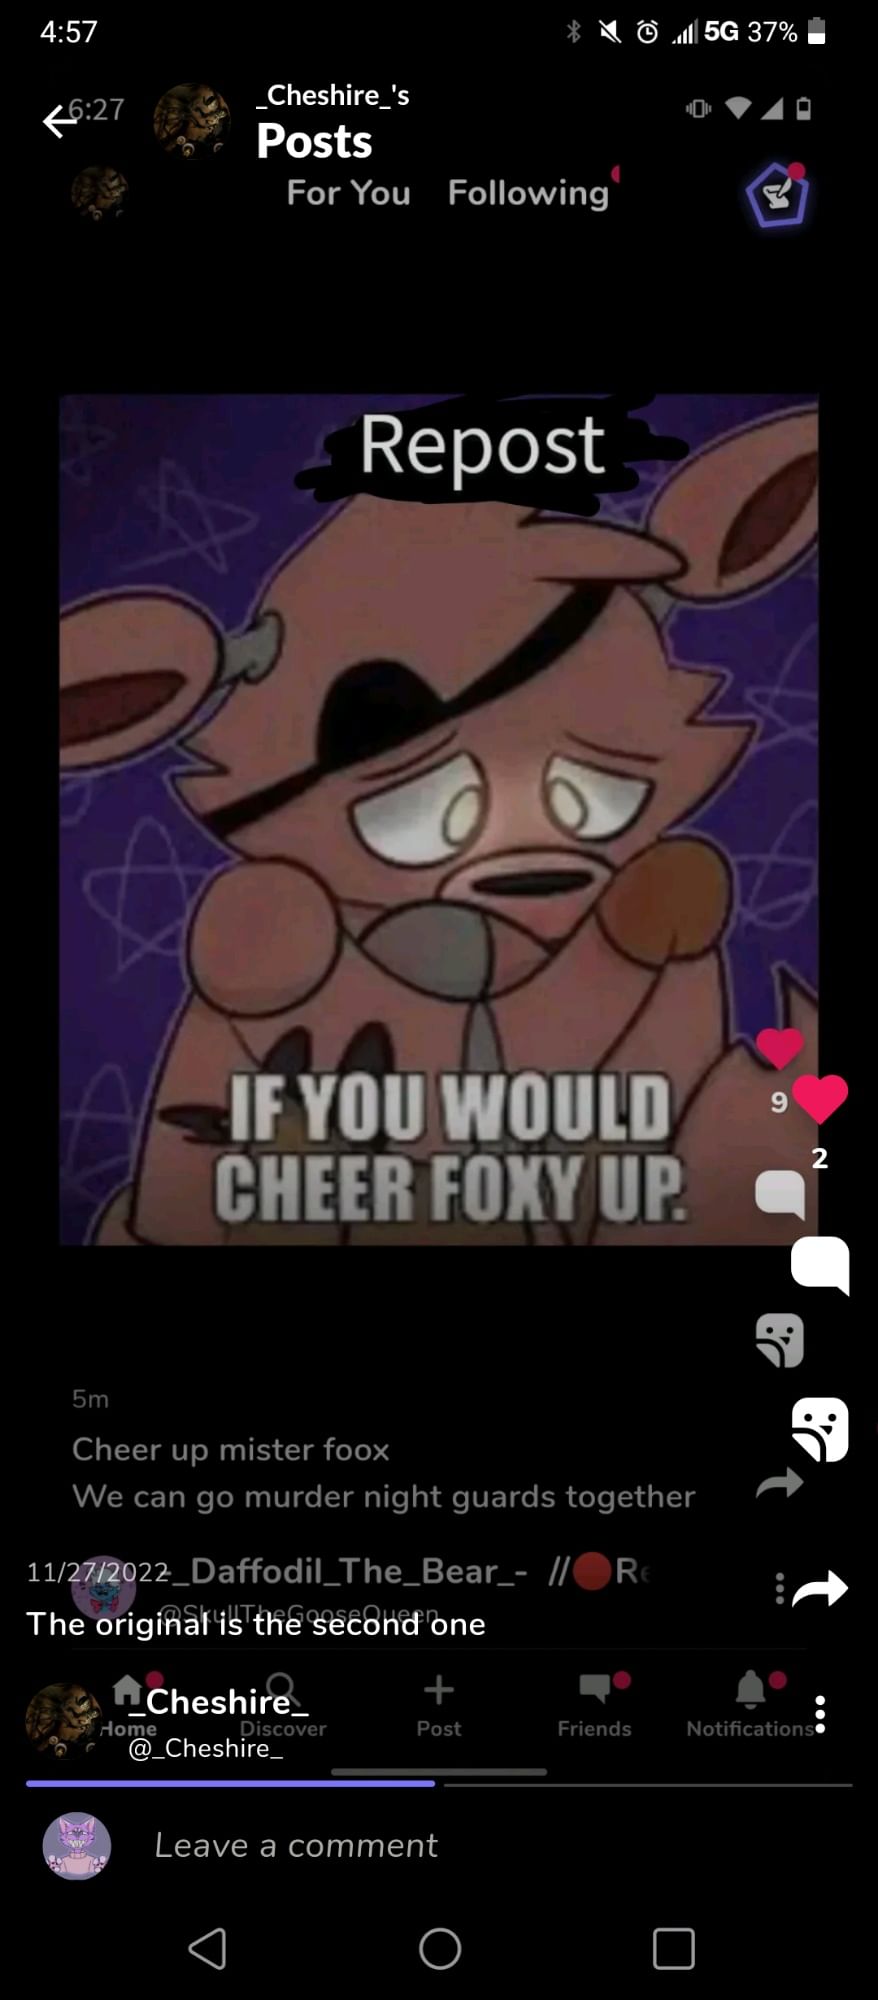 Foxy sad - Foxy sad updated their profile picture.